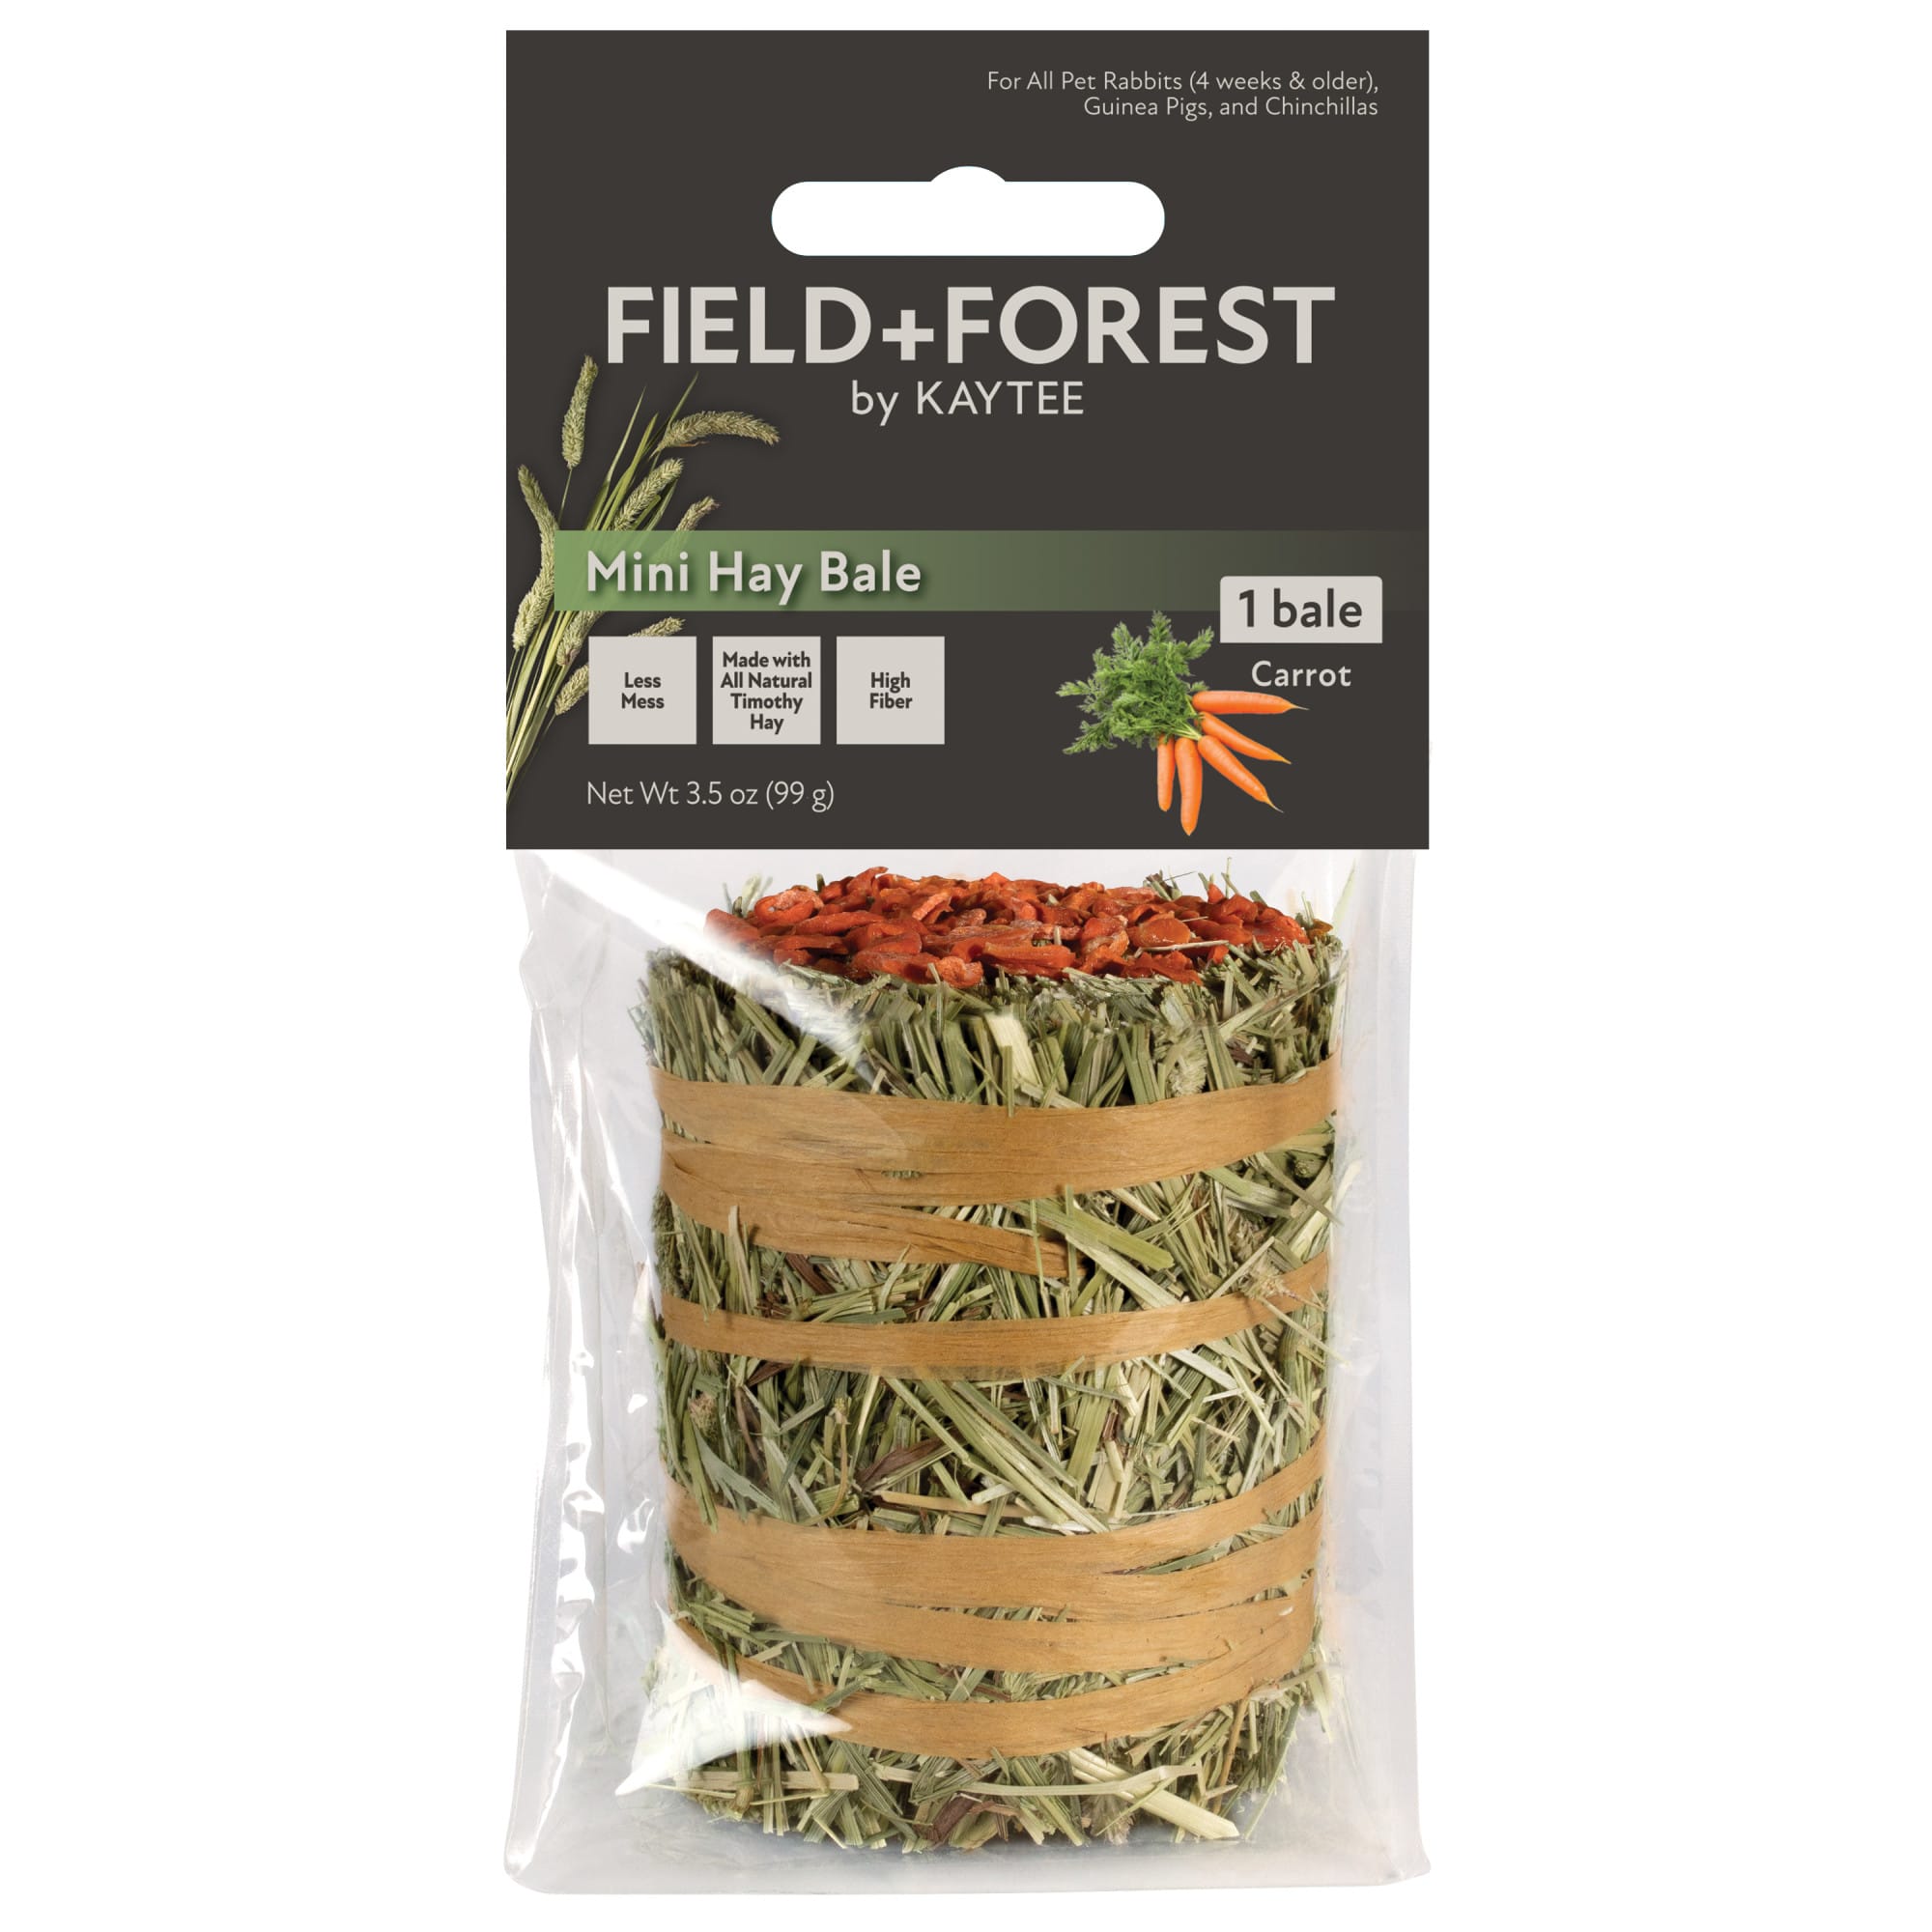 Kaytee Field+Forest Carrot Mini Hay Bale, 3.5 oz.